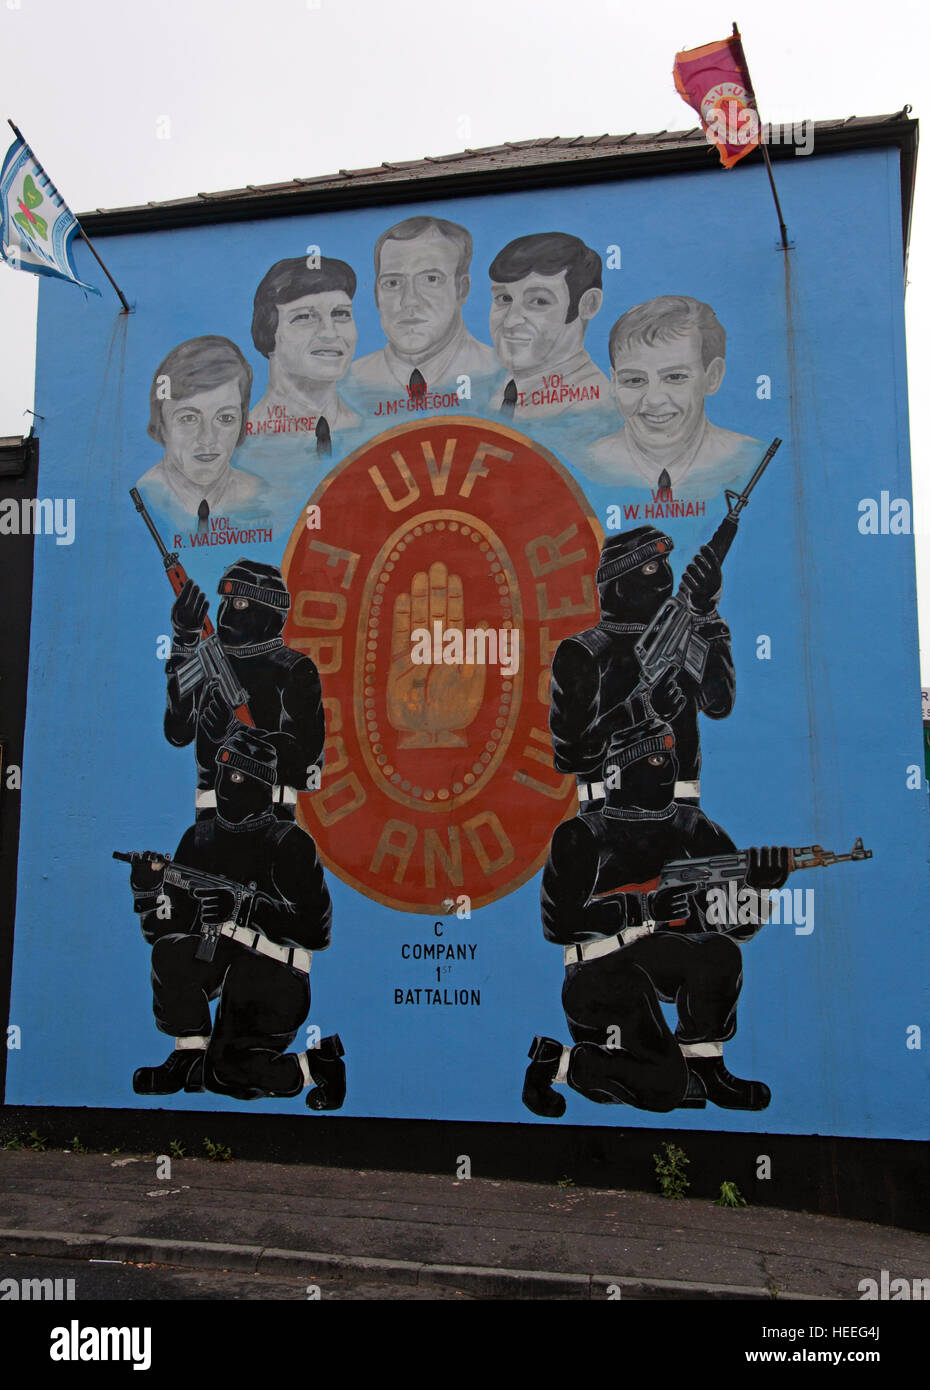 Belfast unioniste, UVF Loyaliste C-murale Entreprise,1er Bataillon Wadsworth,MCINTYRE,McGregor,Chapman,Hannah Banque D'Images